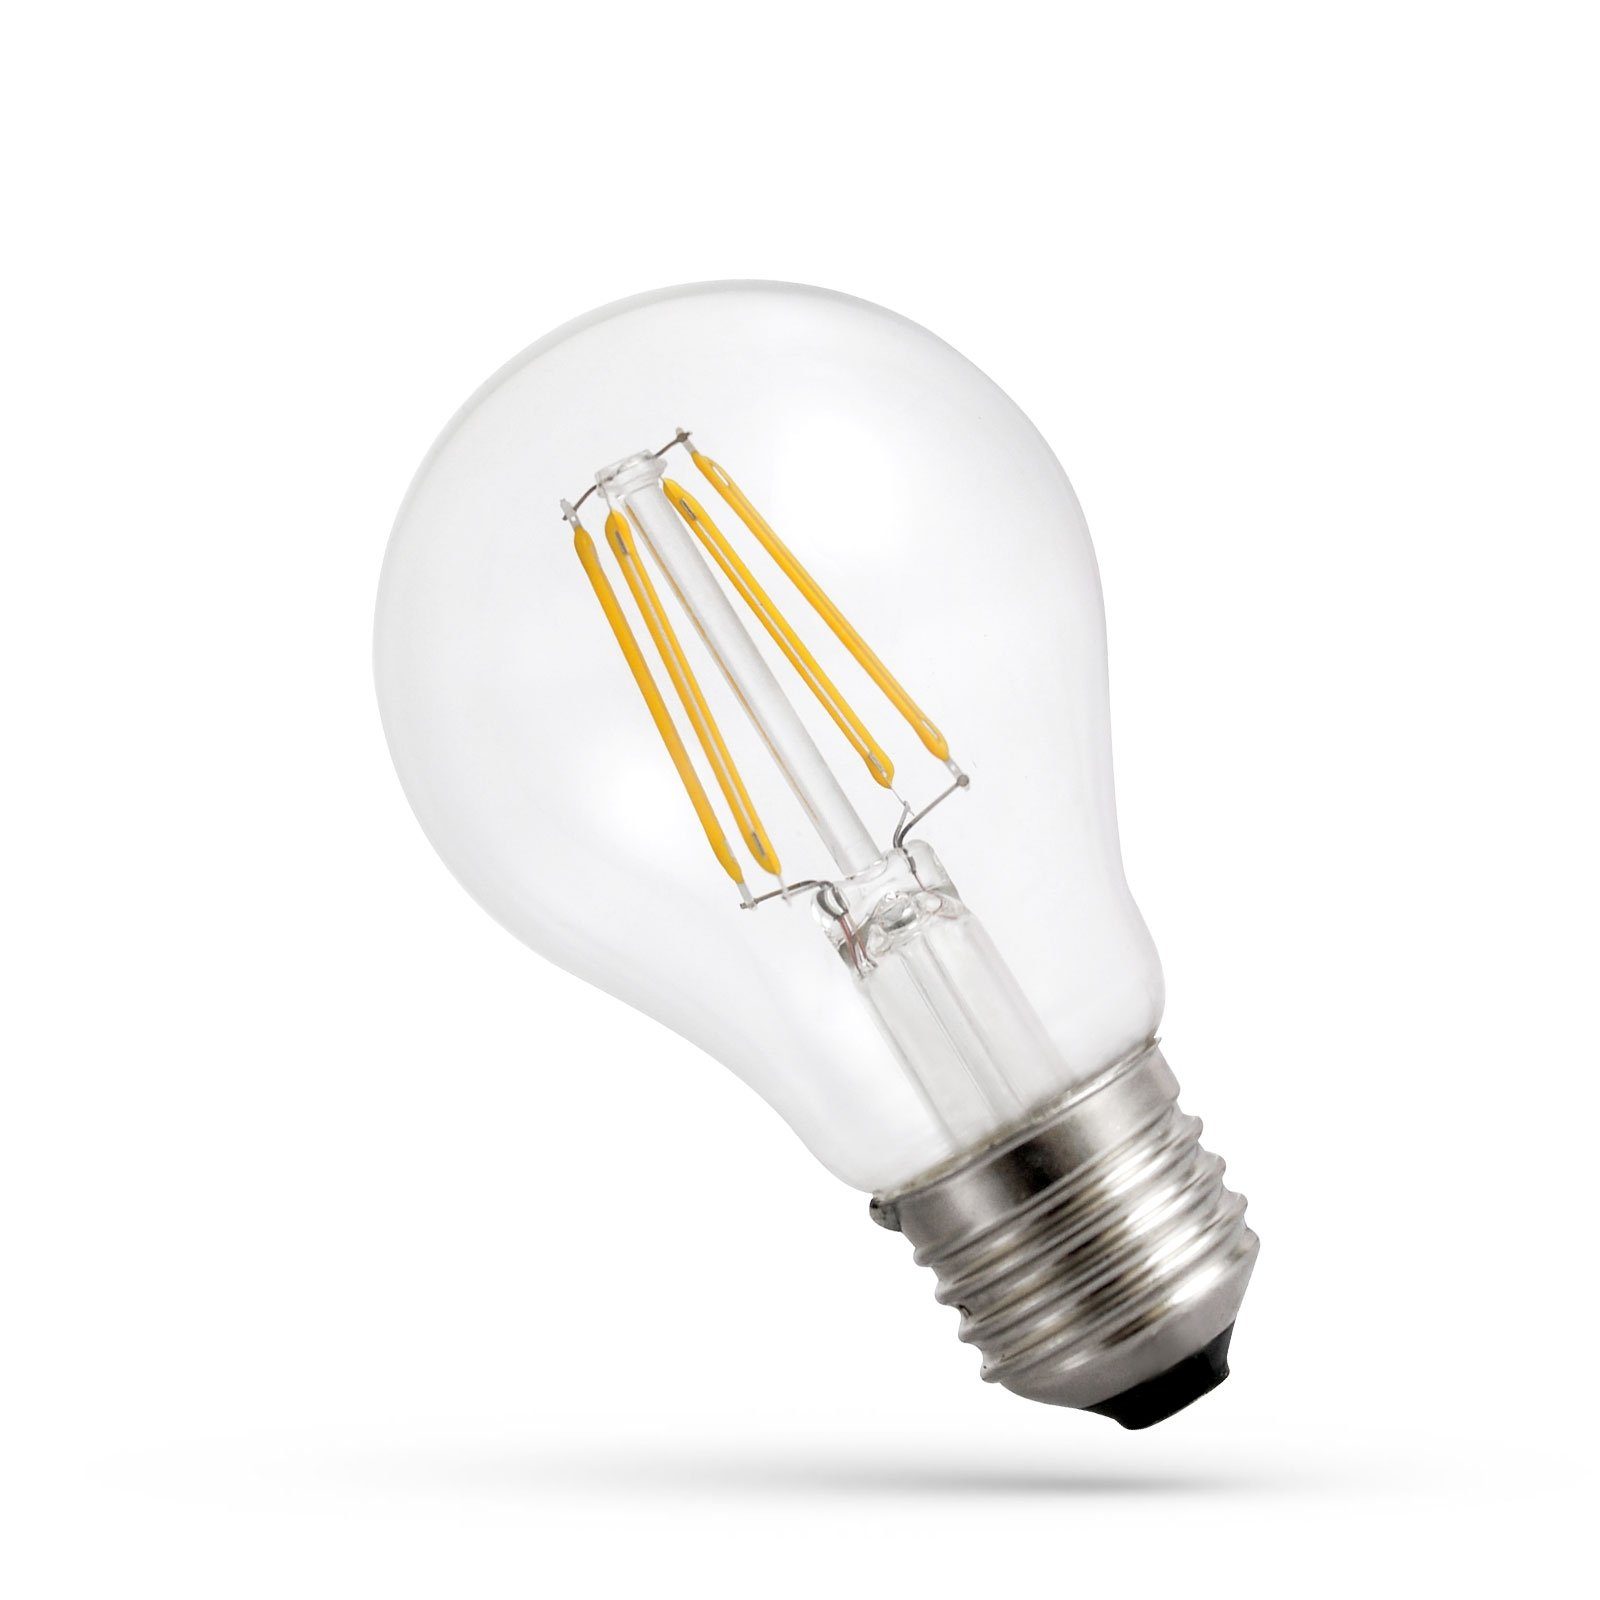 SpectrumLED LED-Leuchtmittel LED E27 A60 Filament klar 4W 230V Extra Warmweiß 340lm Birne 1800K, E27, Extra Warmweiß